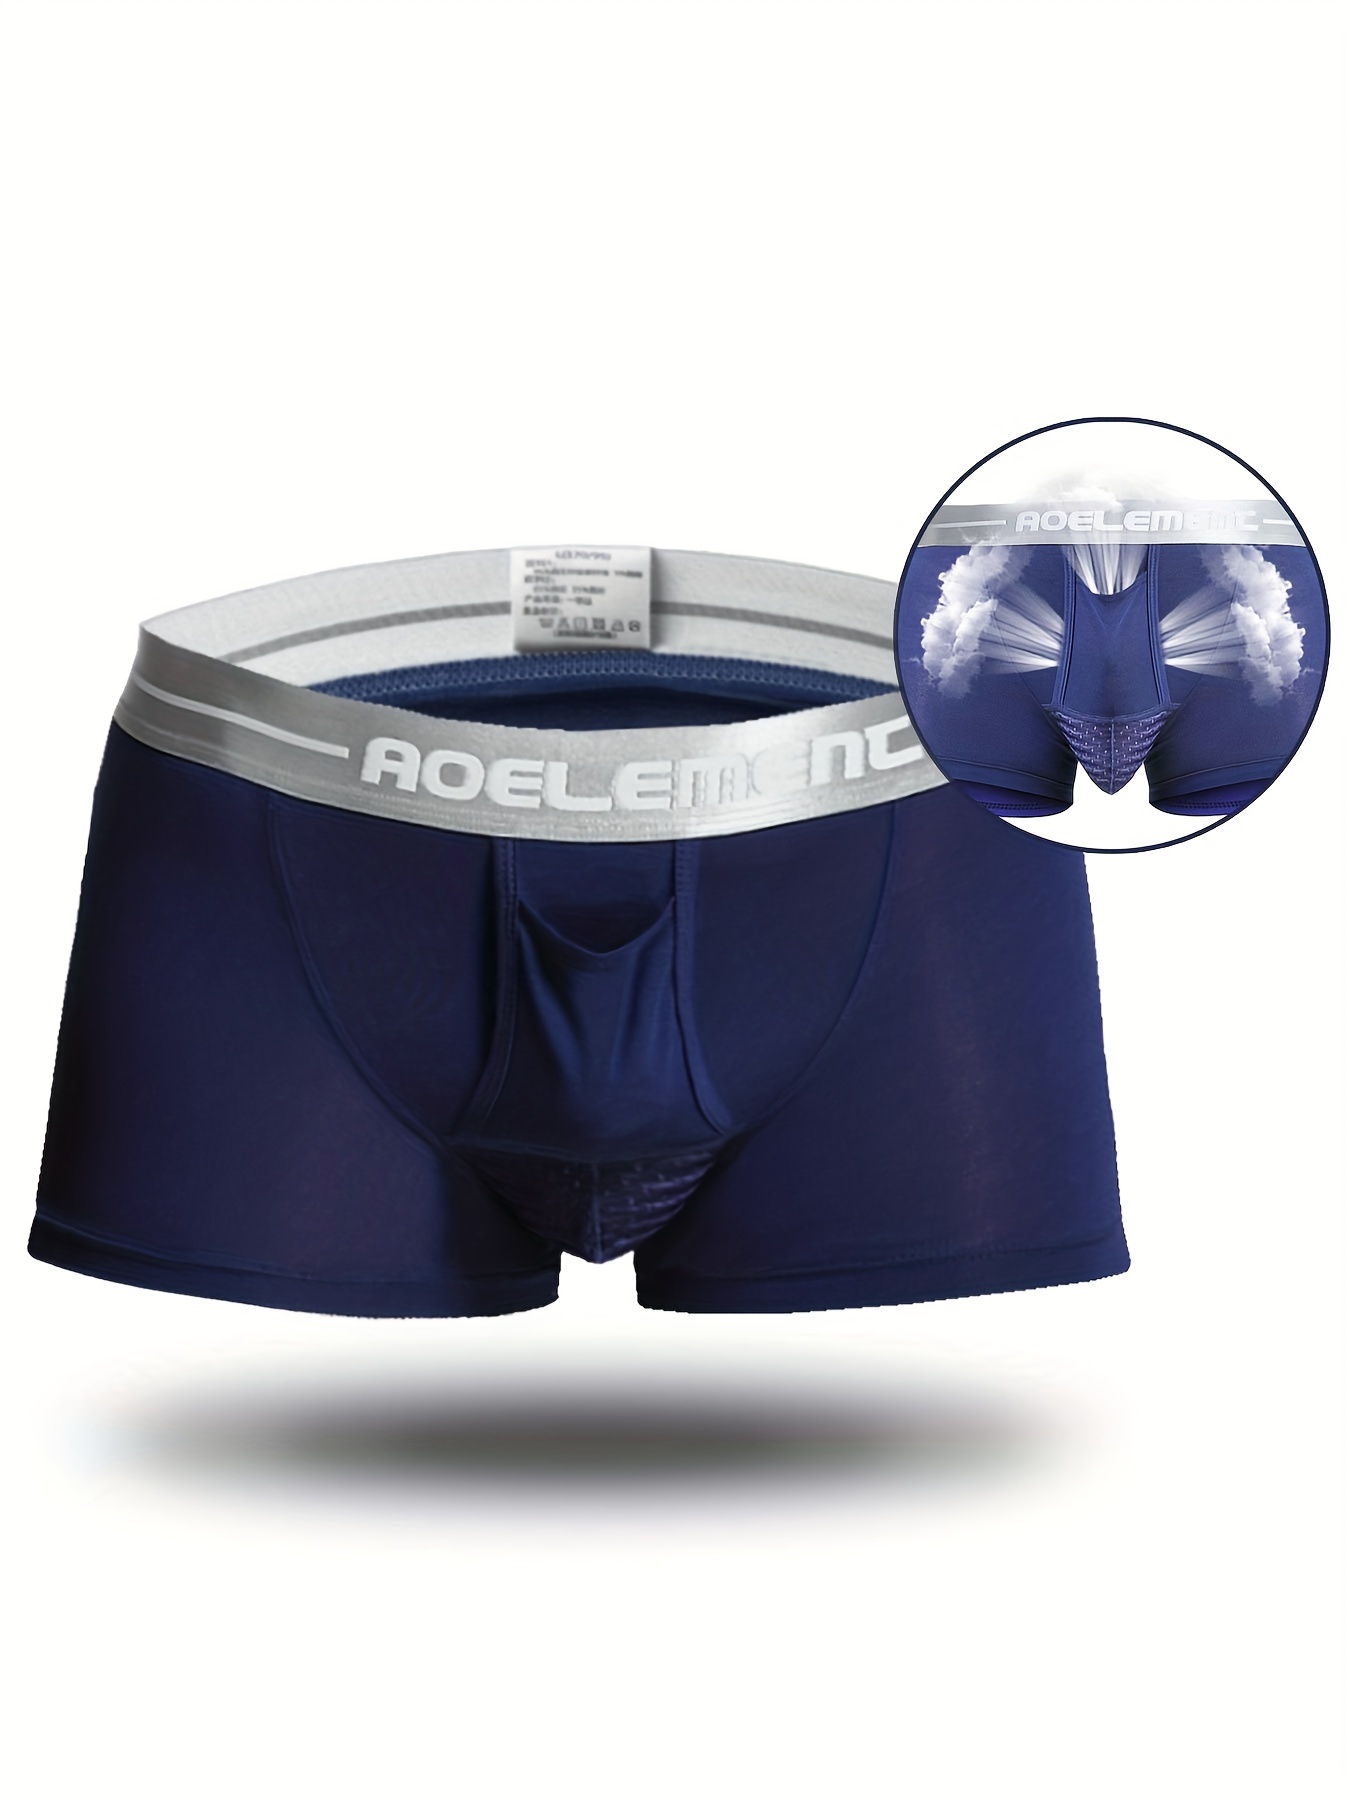 Boxer Brief Shorts Men Underwear Boxers Button U convex Penis